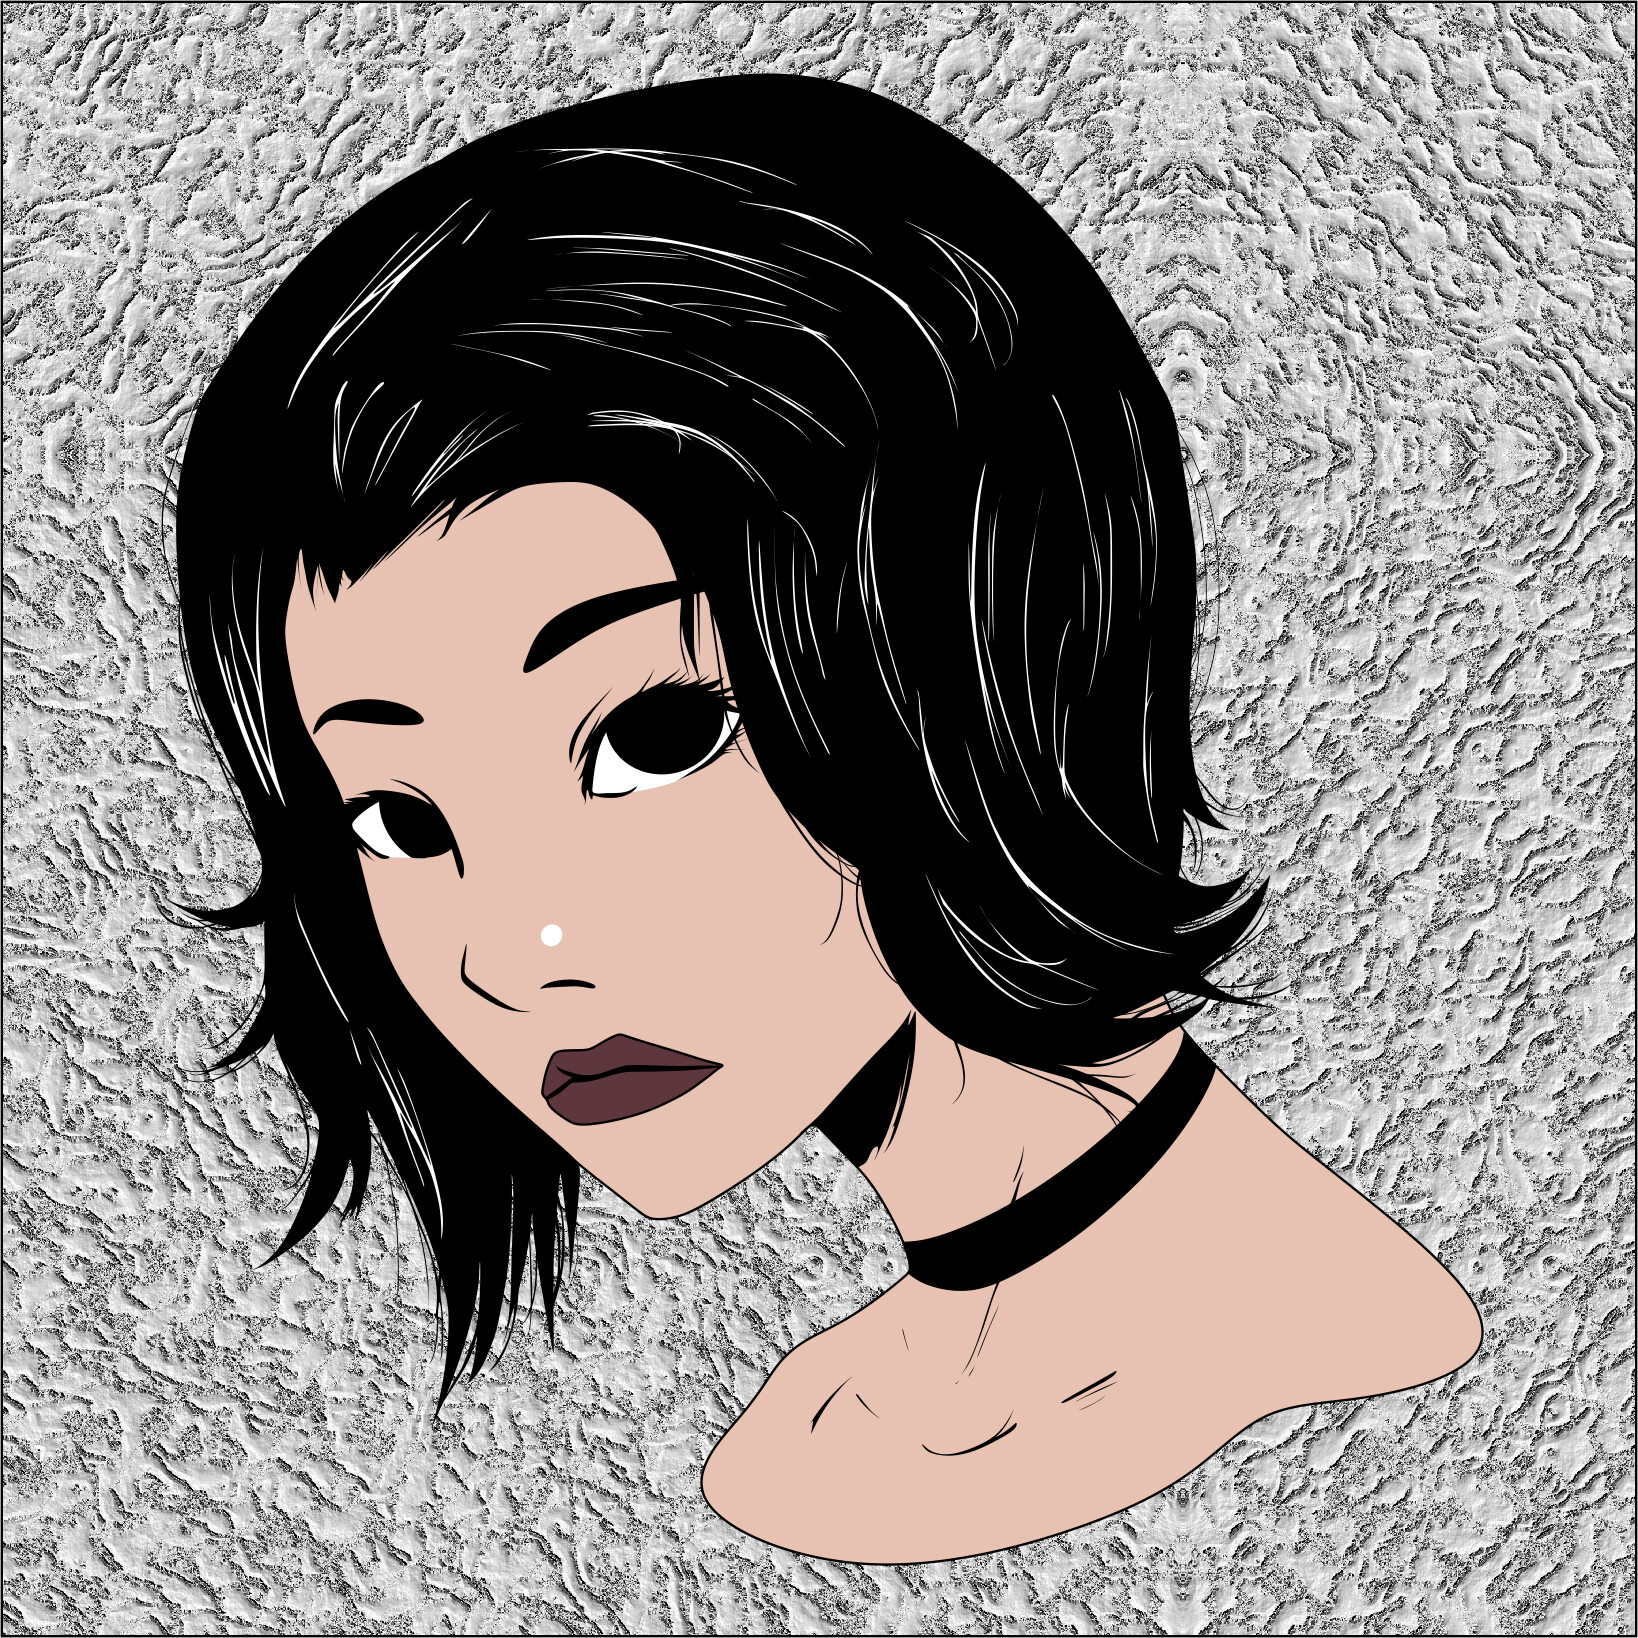 Doomer Girl #2 - Digital Art by SwiftCloud04 on DeviantArt